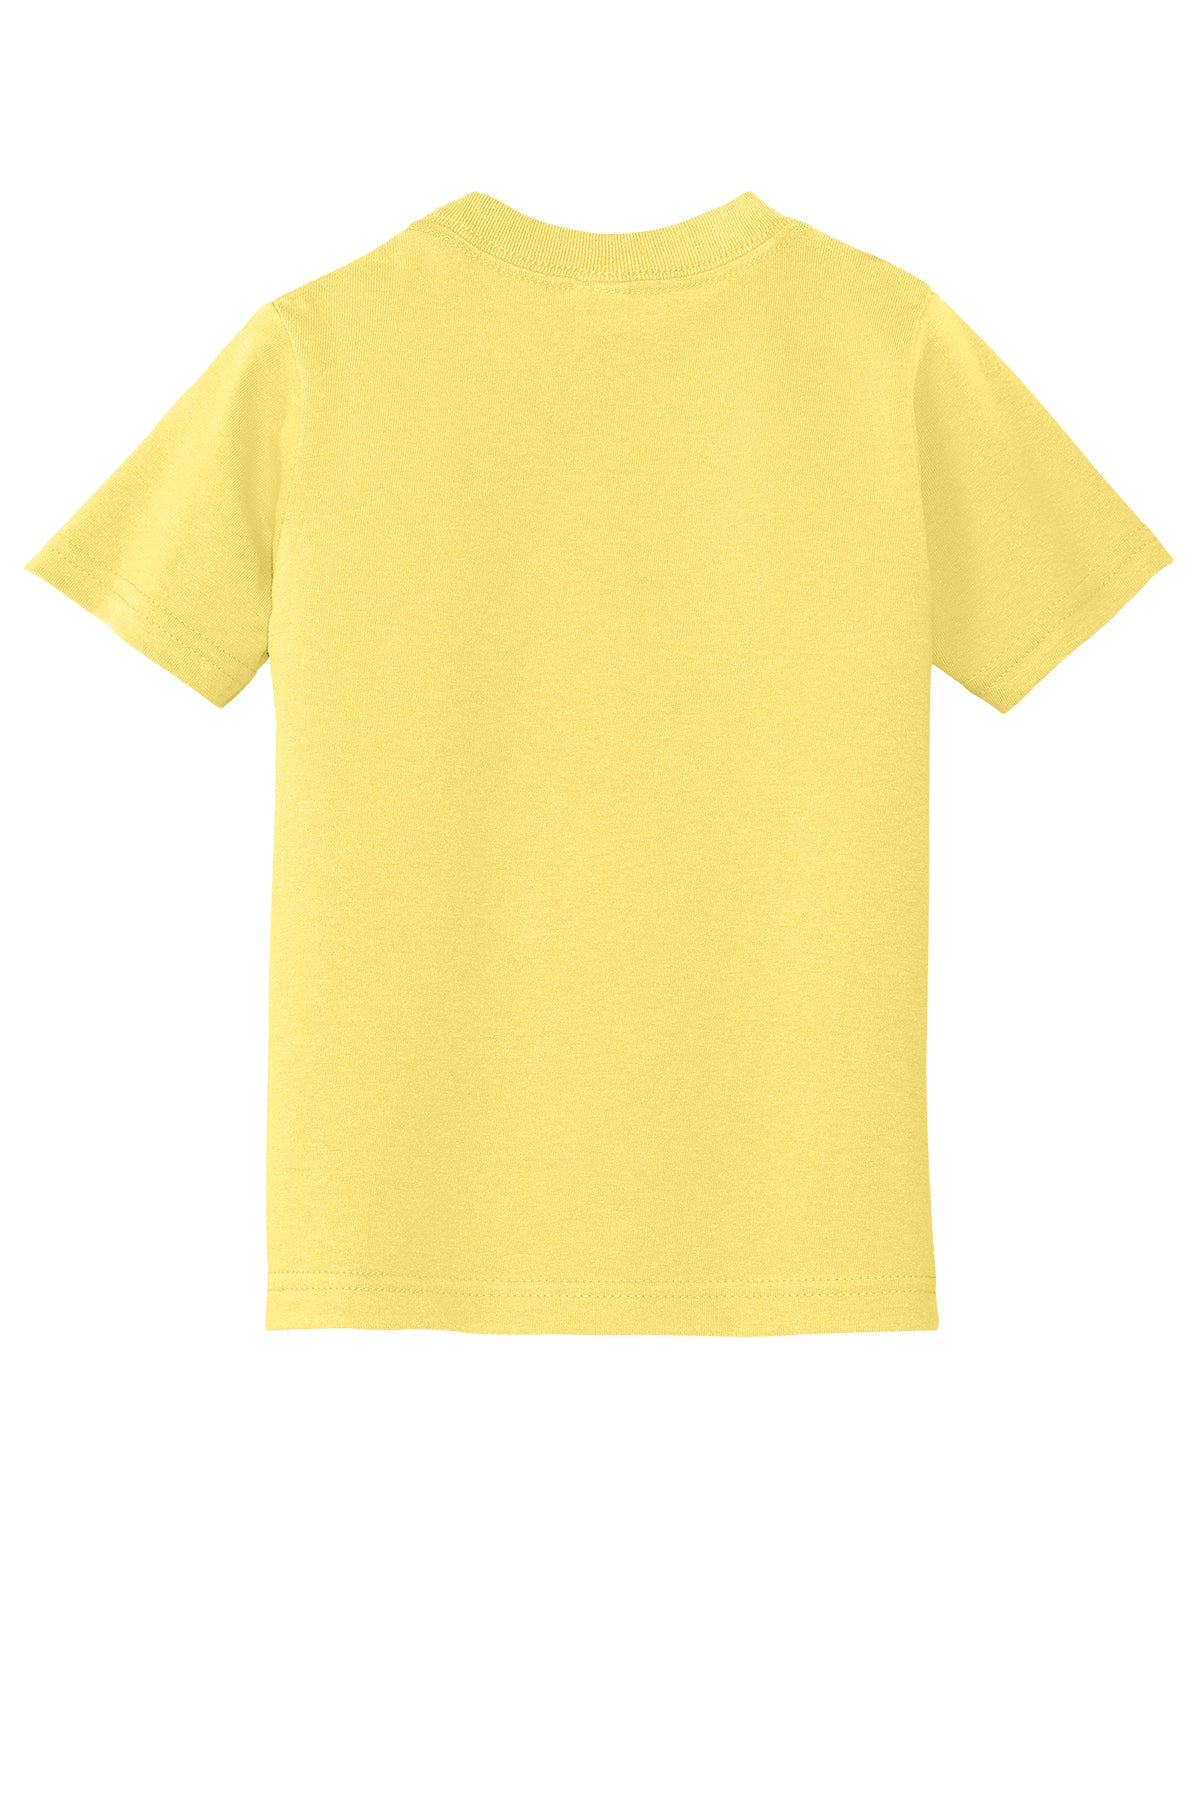 Port & Co Car54T Toddler T-Shirt 2T / Yellow